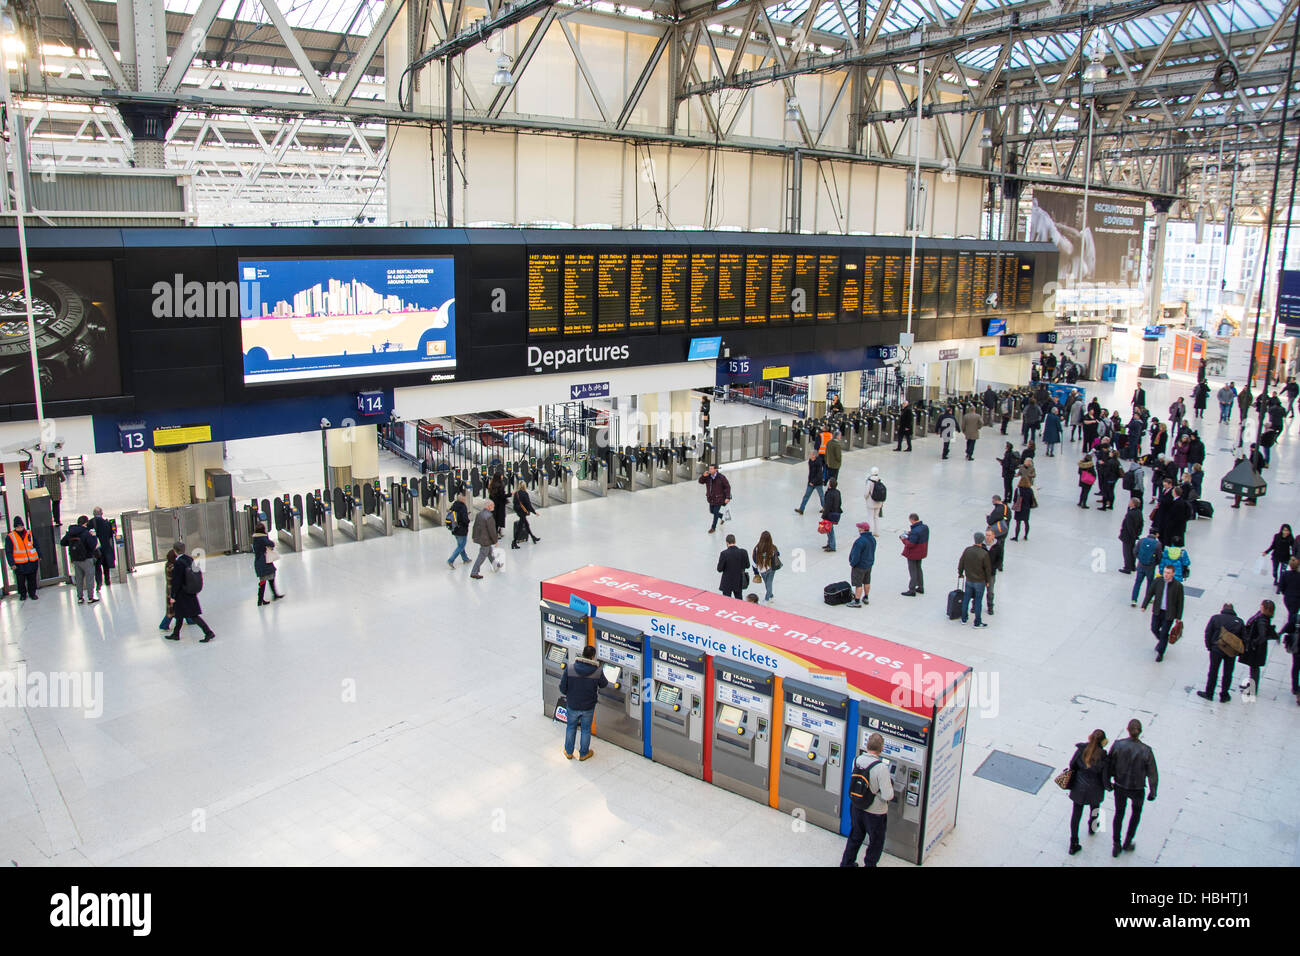 Departures board at Waterloo Railway Station, Waterloo, London Borough of Lambeth, Greater London, England, United Kingdom Stock Photo